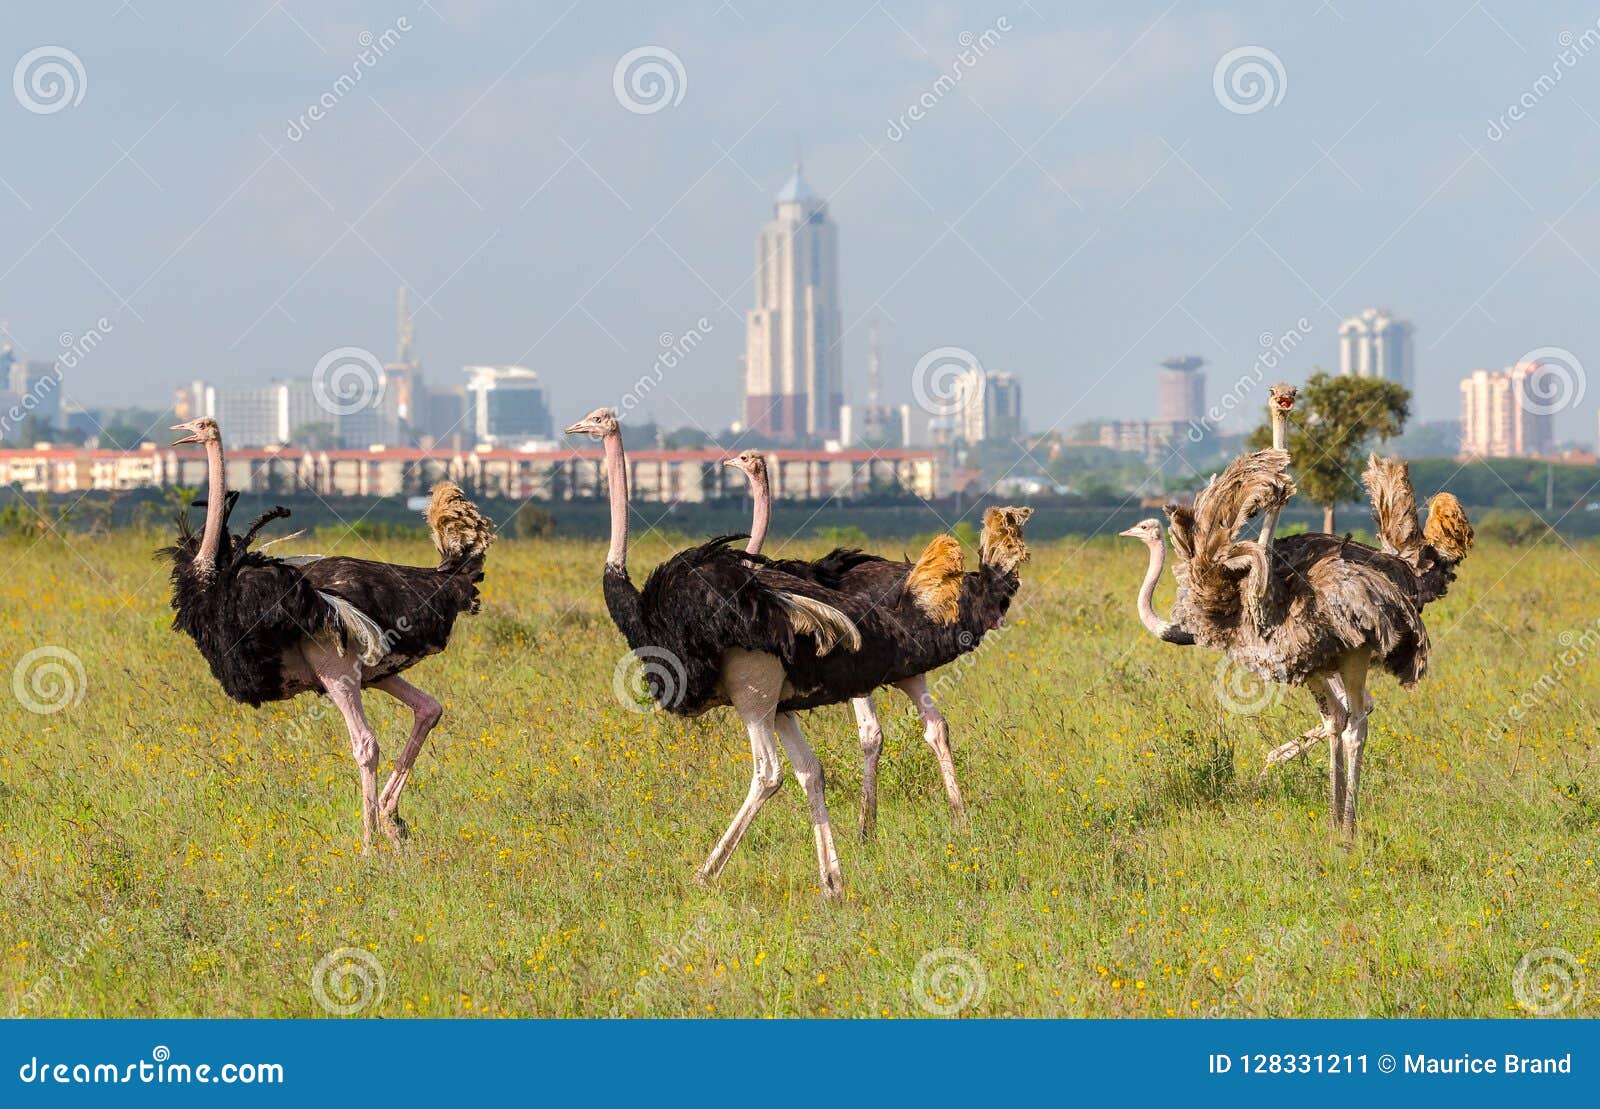 ostriches in nairobi national park